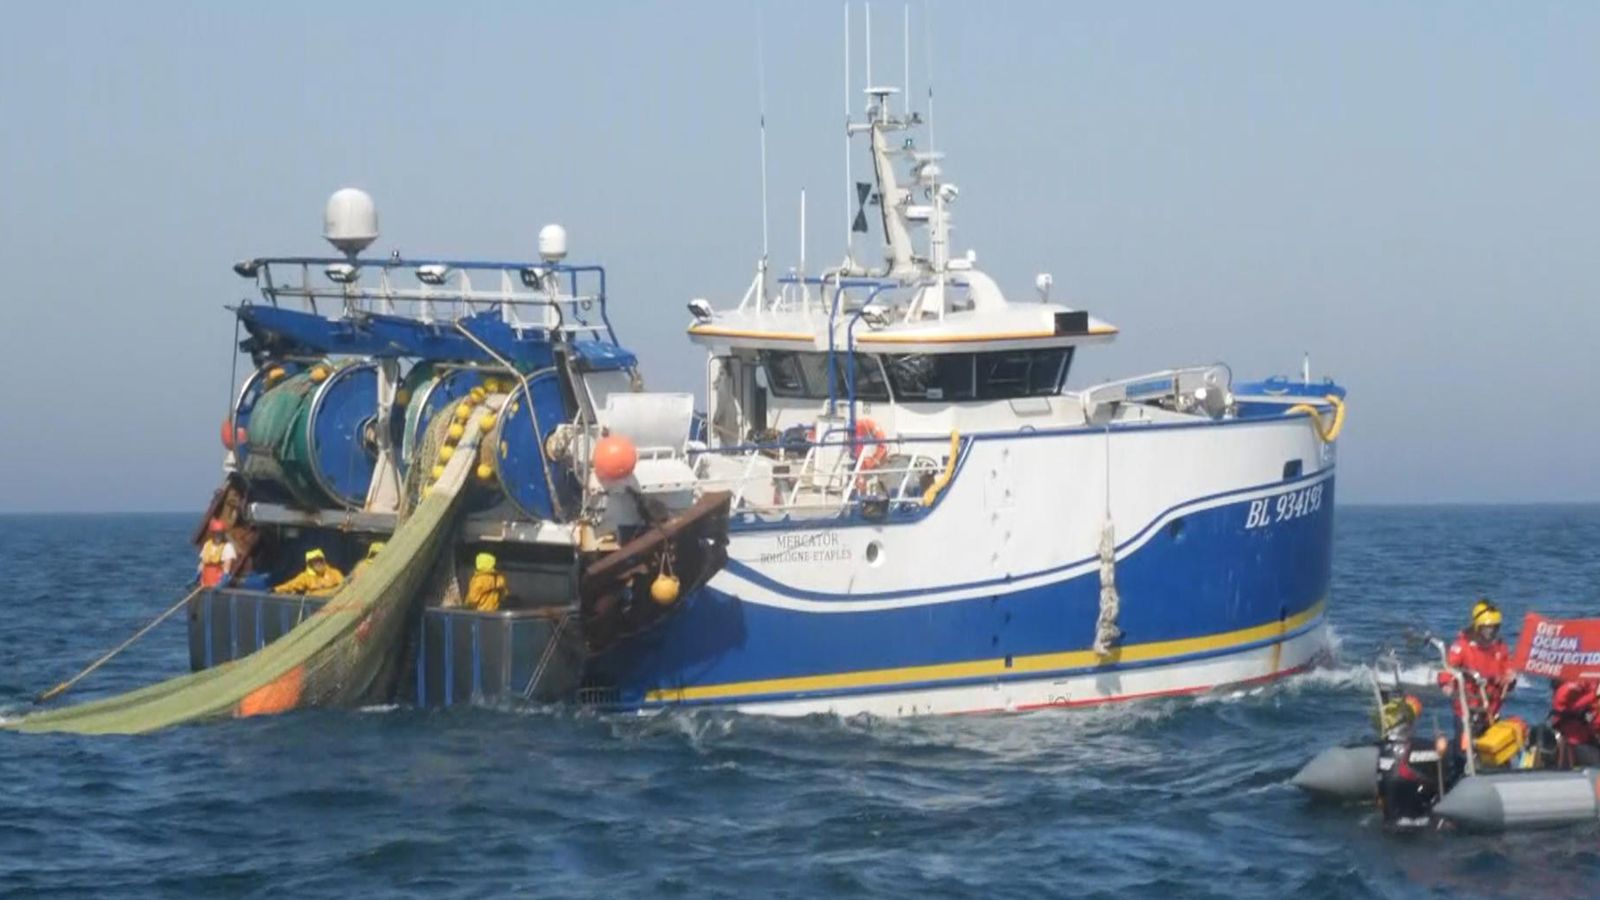 Prancis berjanji untuk ‘berjuang setiap hari’ untuk menegakkan hak-hak nelayan di tengah perselisihan Brexit dengan Inggris |  Berita Politik